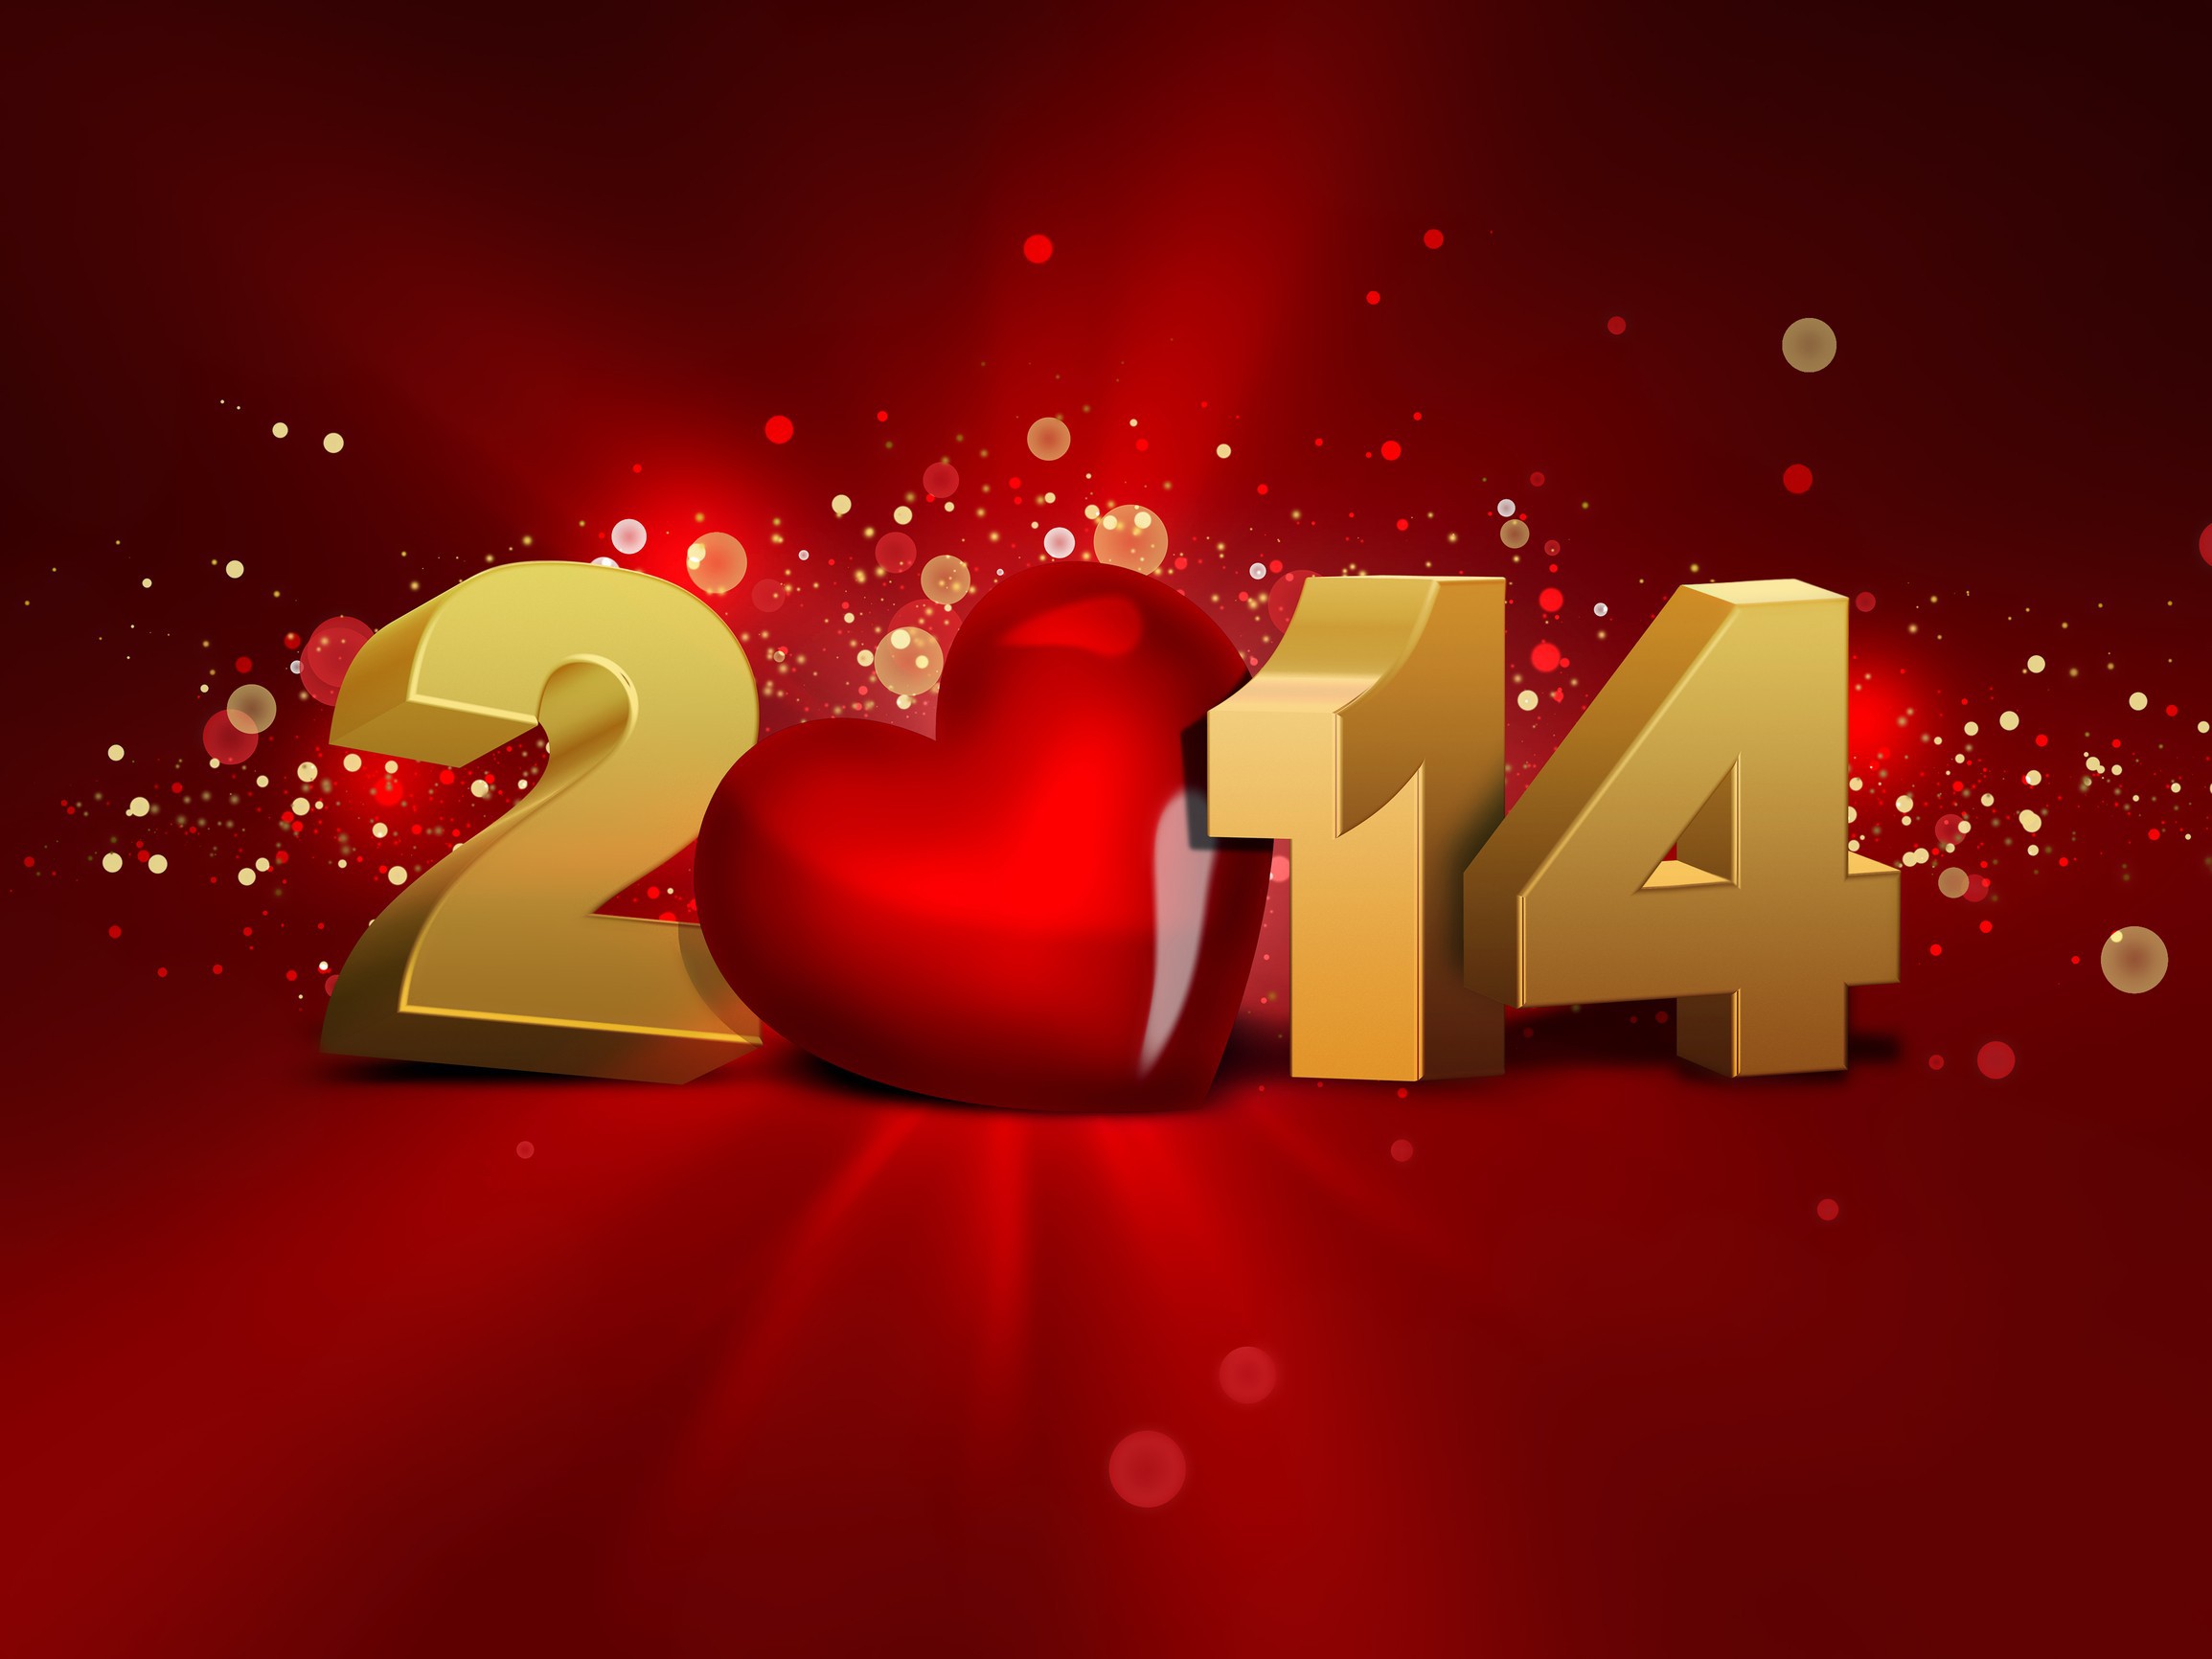 2014 год 2015 год количество. 2014 Год картинка. Новый год 2014. Картинки новый год 2015. Картинки 2014.